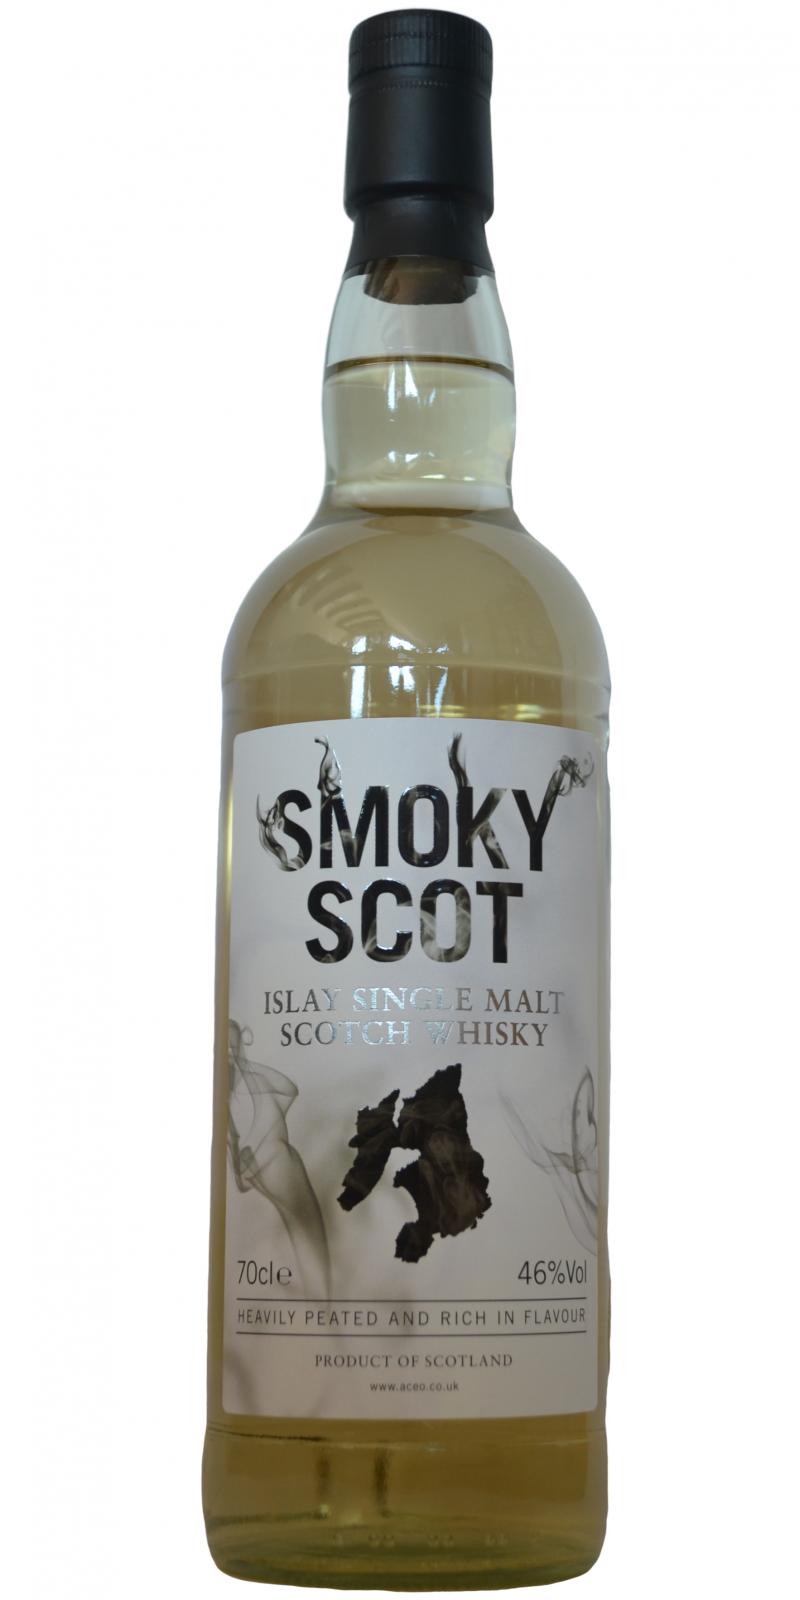 Smoky Scot Islay Single Malt Scotch Whisky AcL